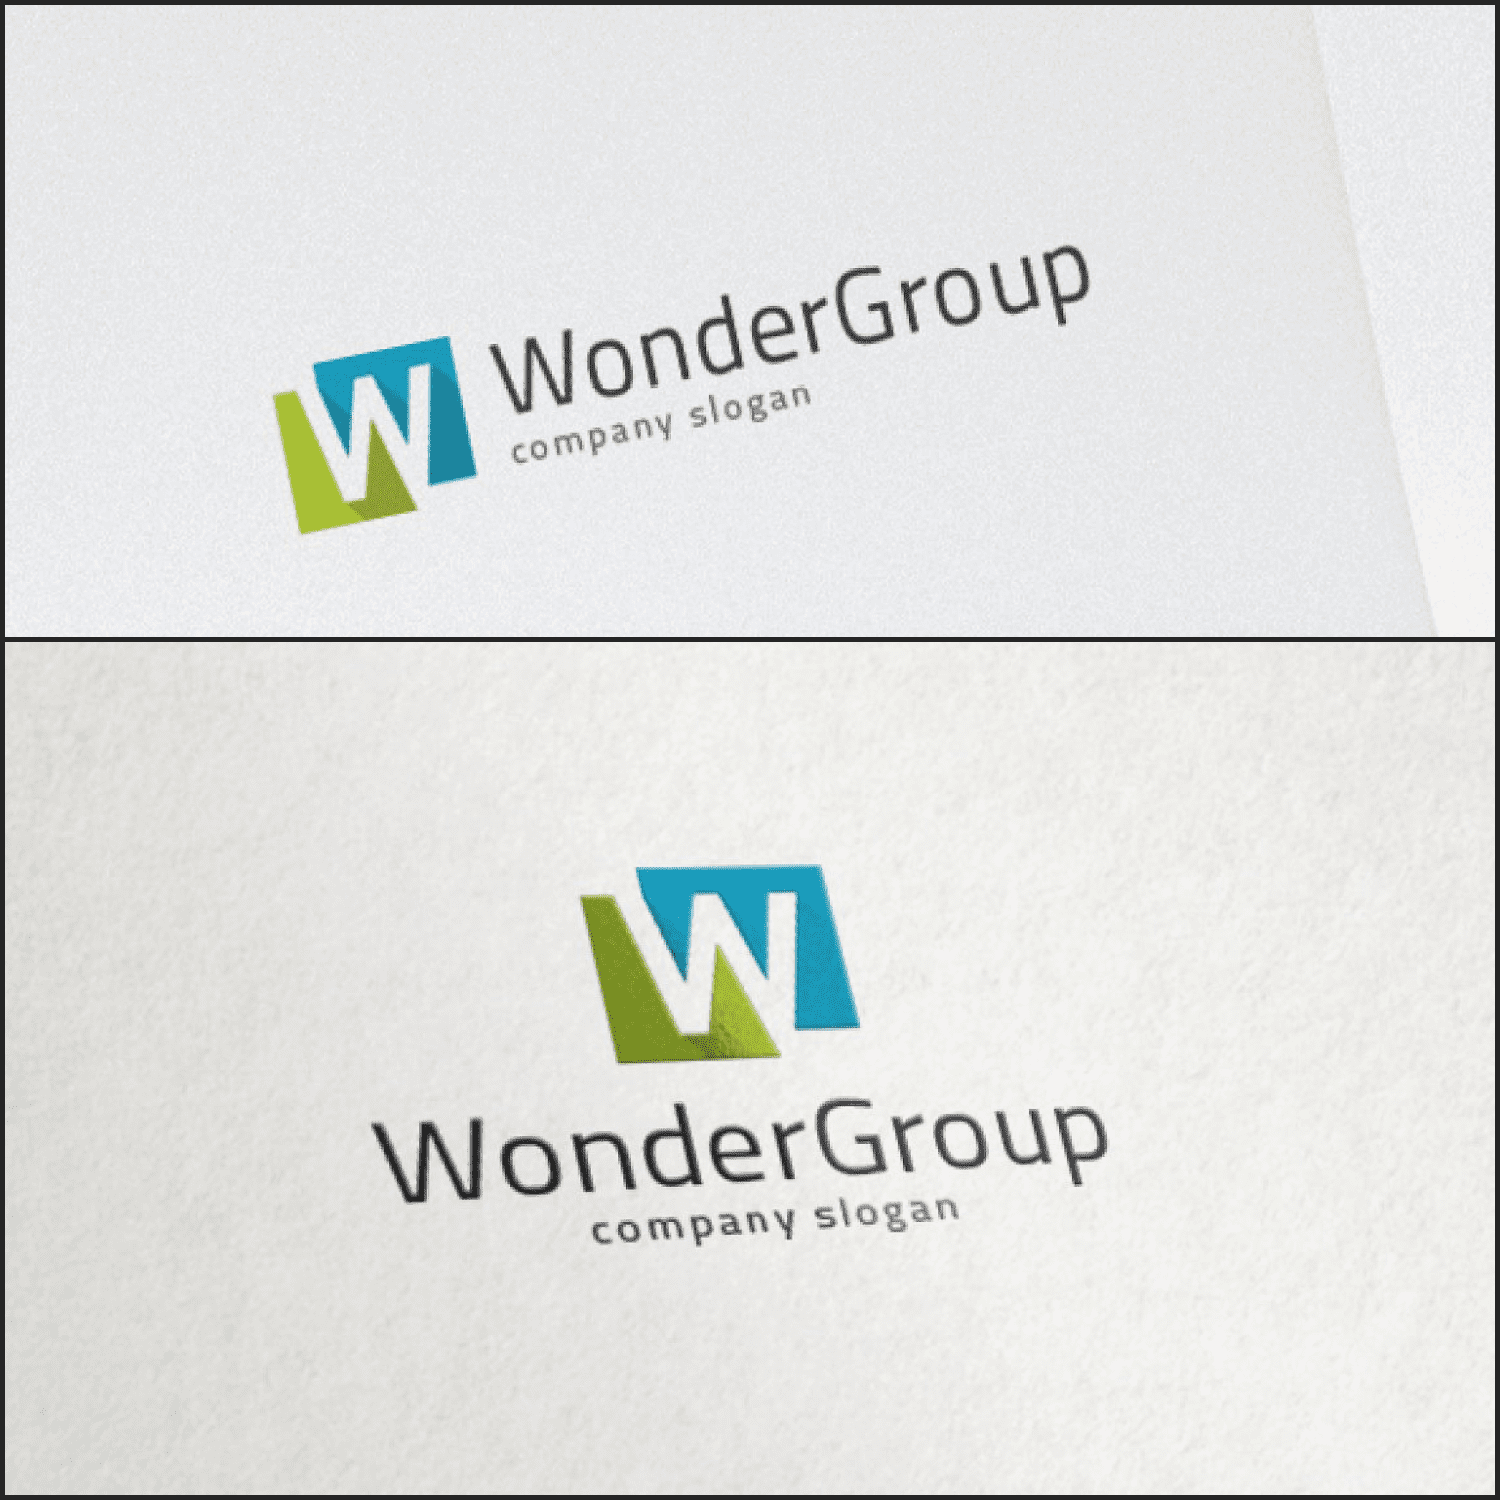 W Logo - Wonder Group cover.